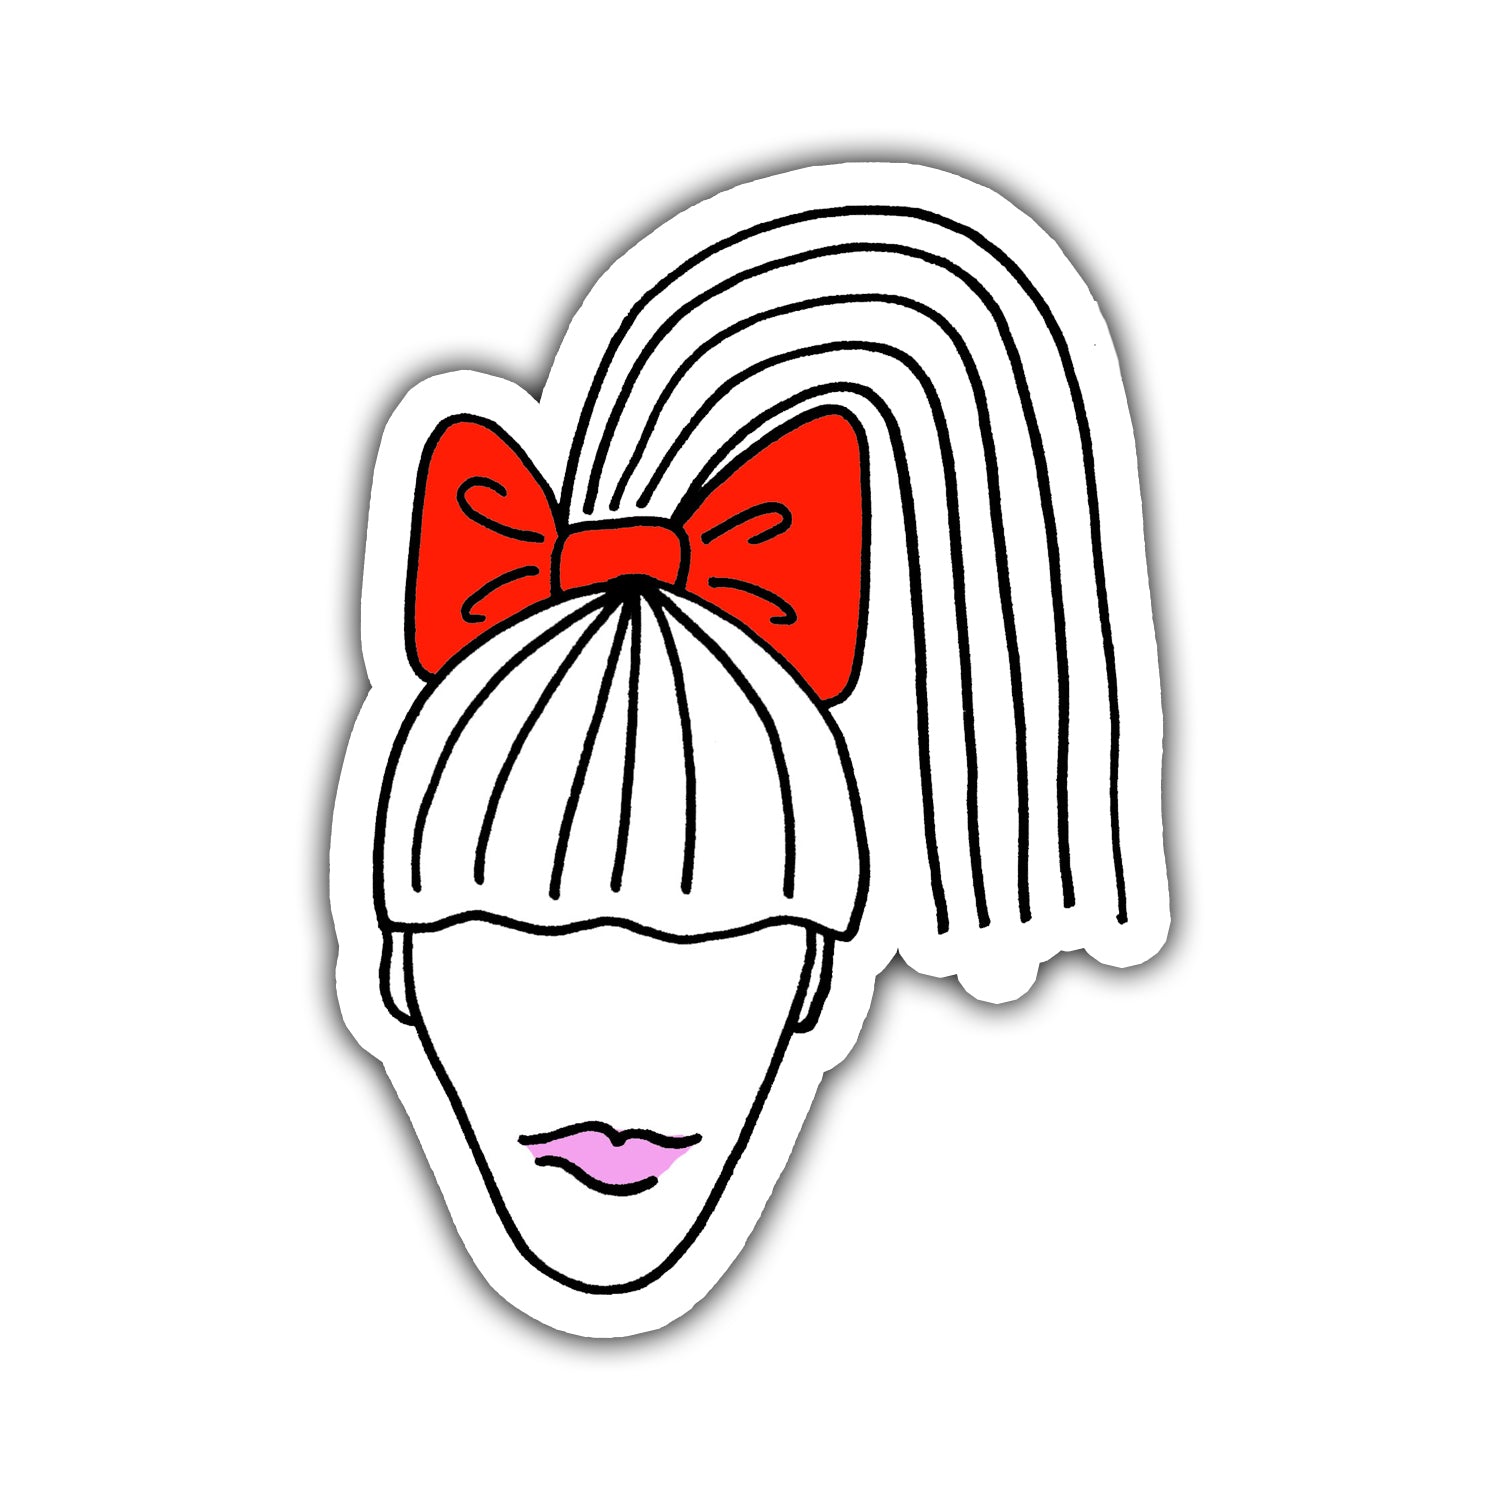 Girl With a Bow Die Cut Sticker - marjorieblume